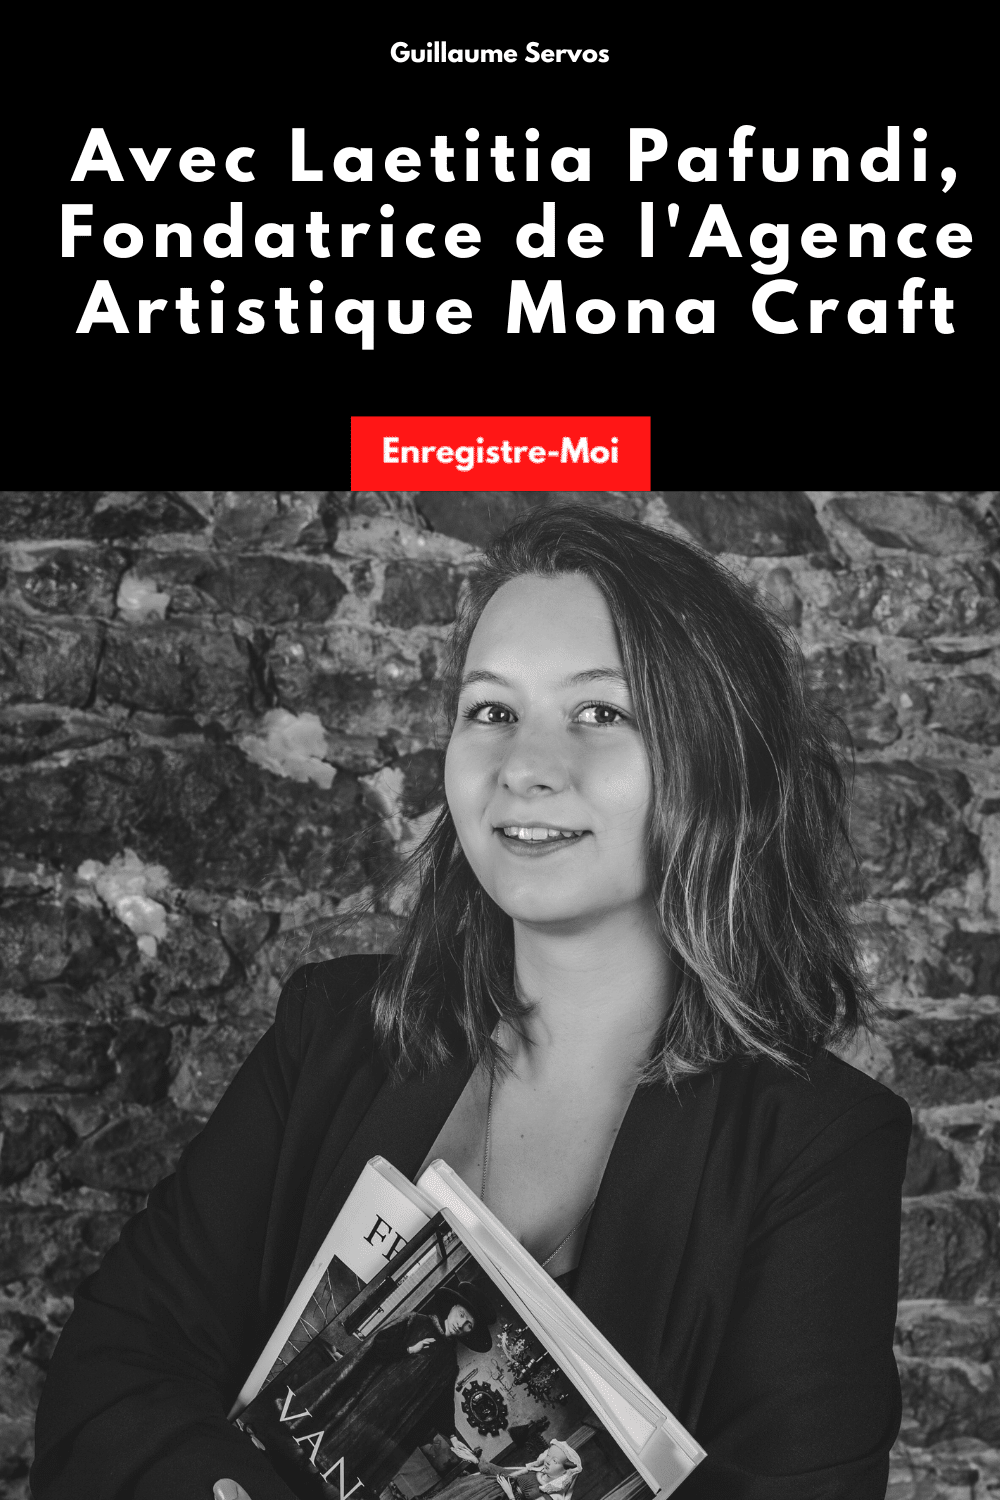 Avec Laetitia Pafundi, Fondatrice de l'Agence Artistique Mona Craft